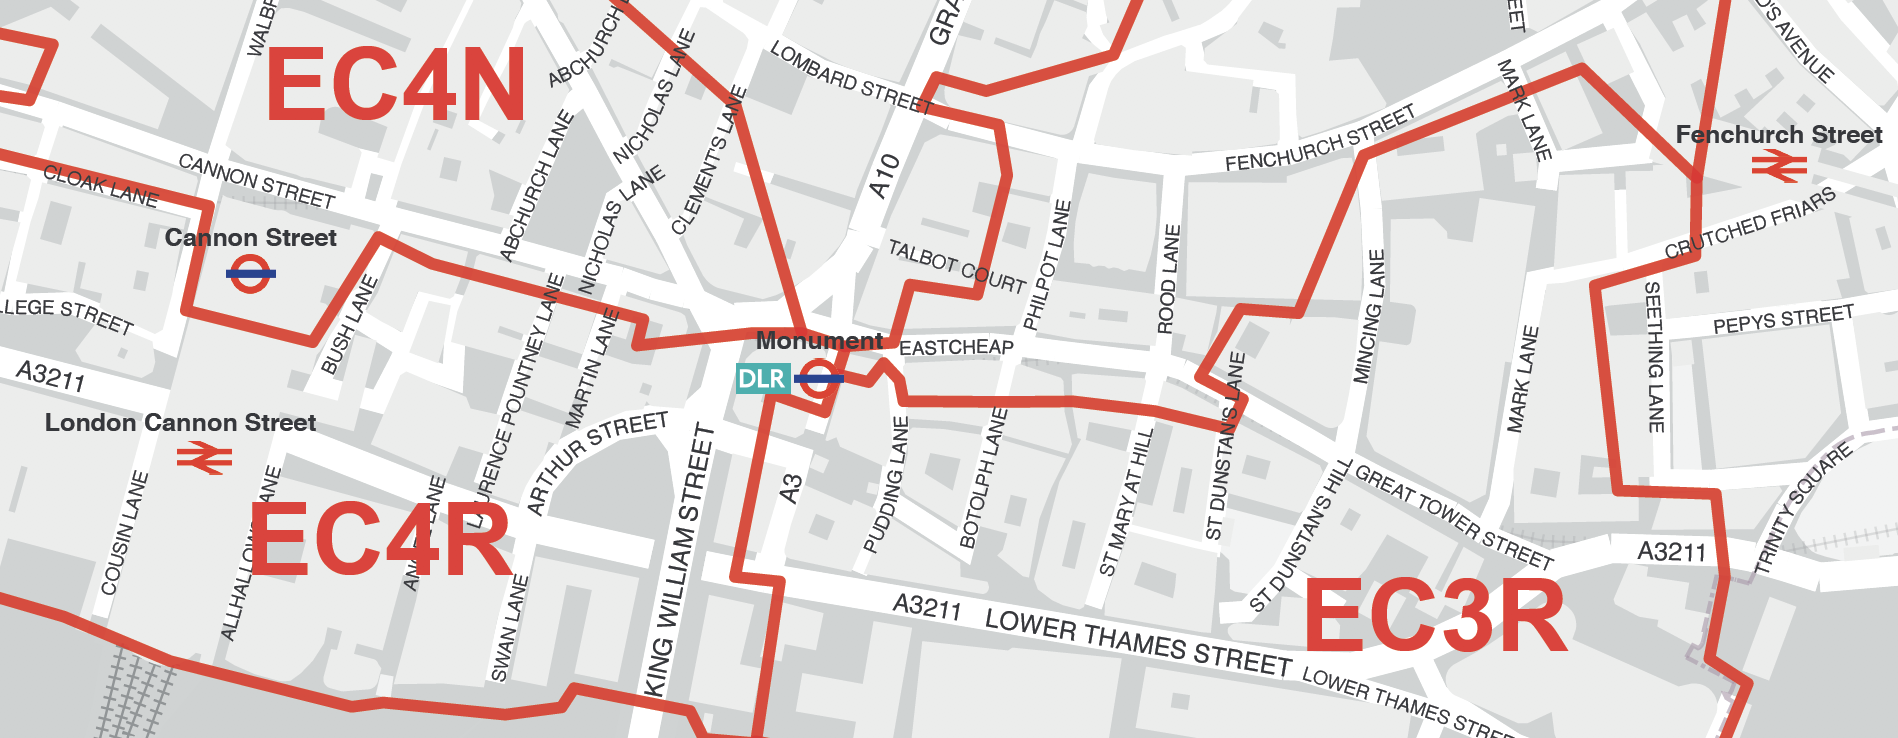 Central London EC postcodes detail